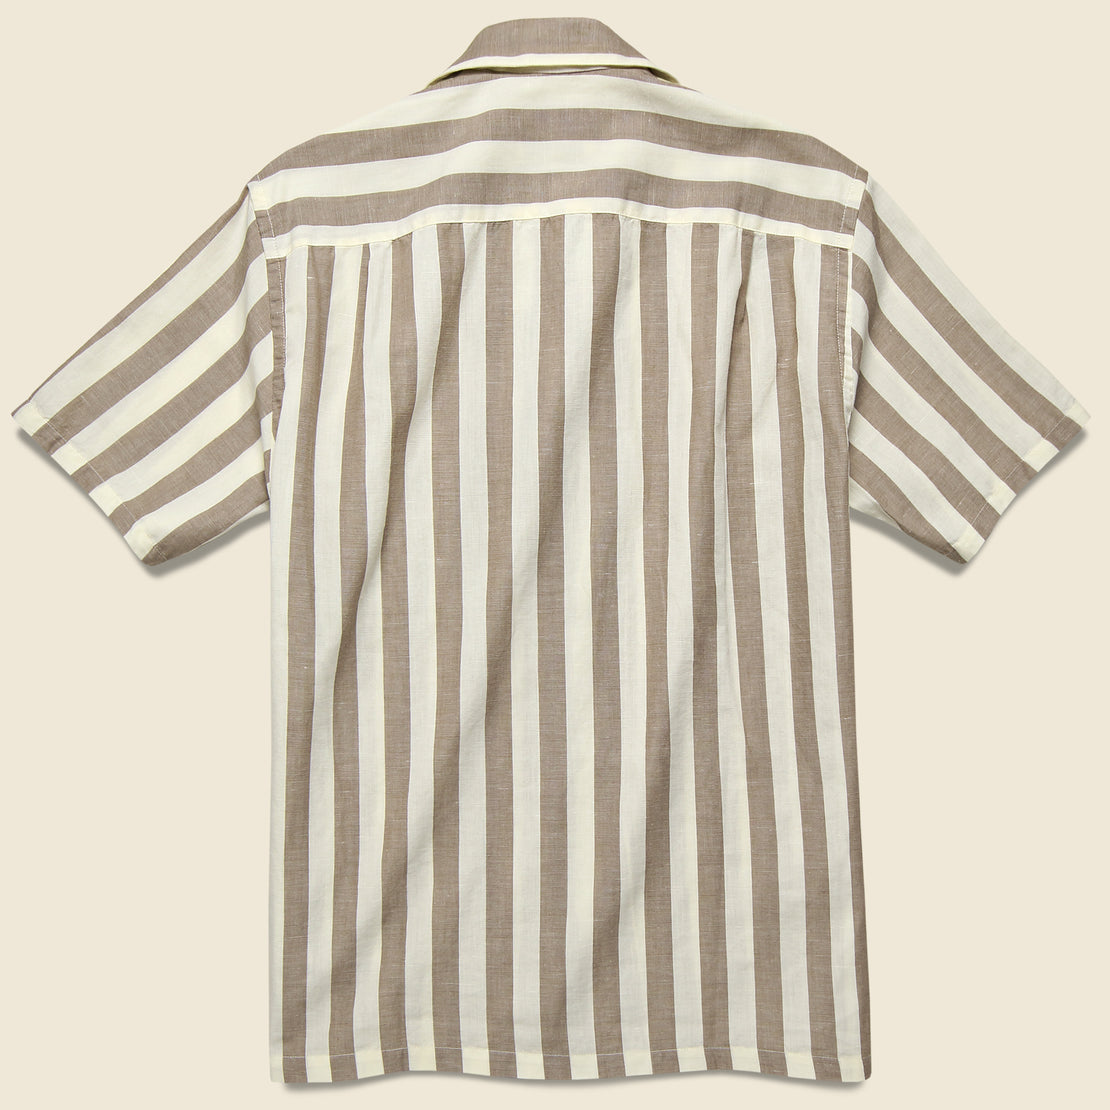 Bayonne Camp Shirt - Brown/White